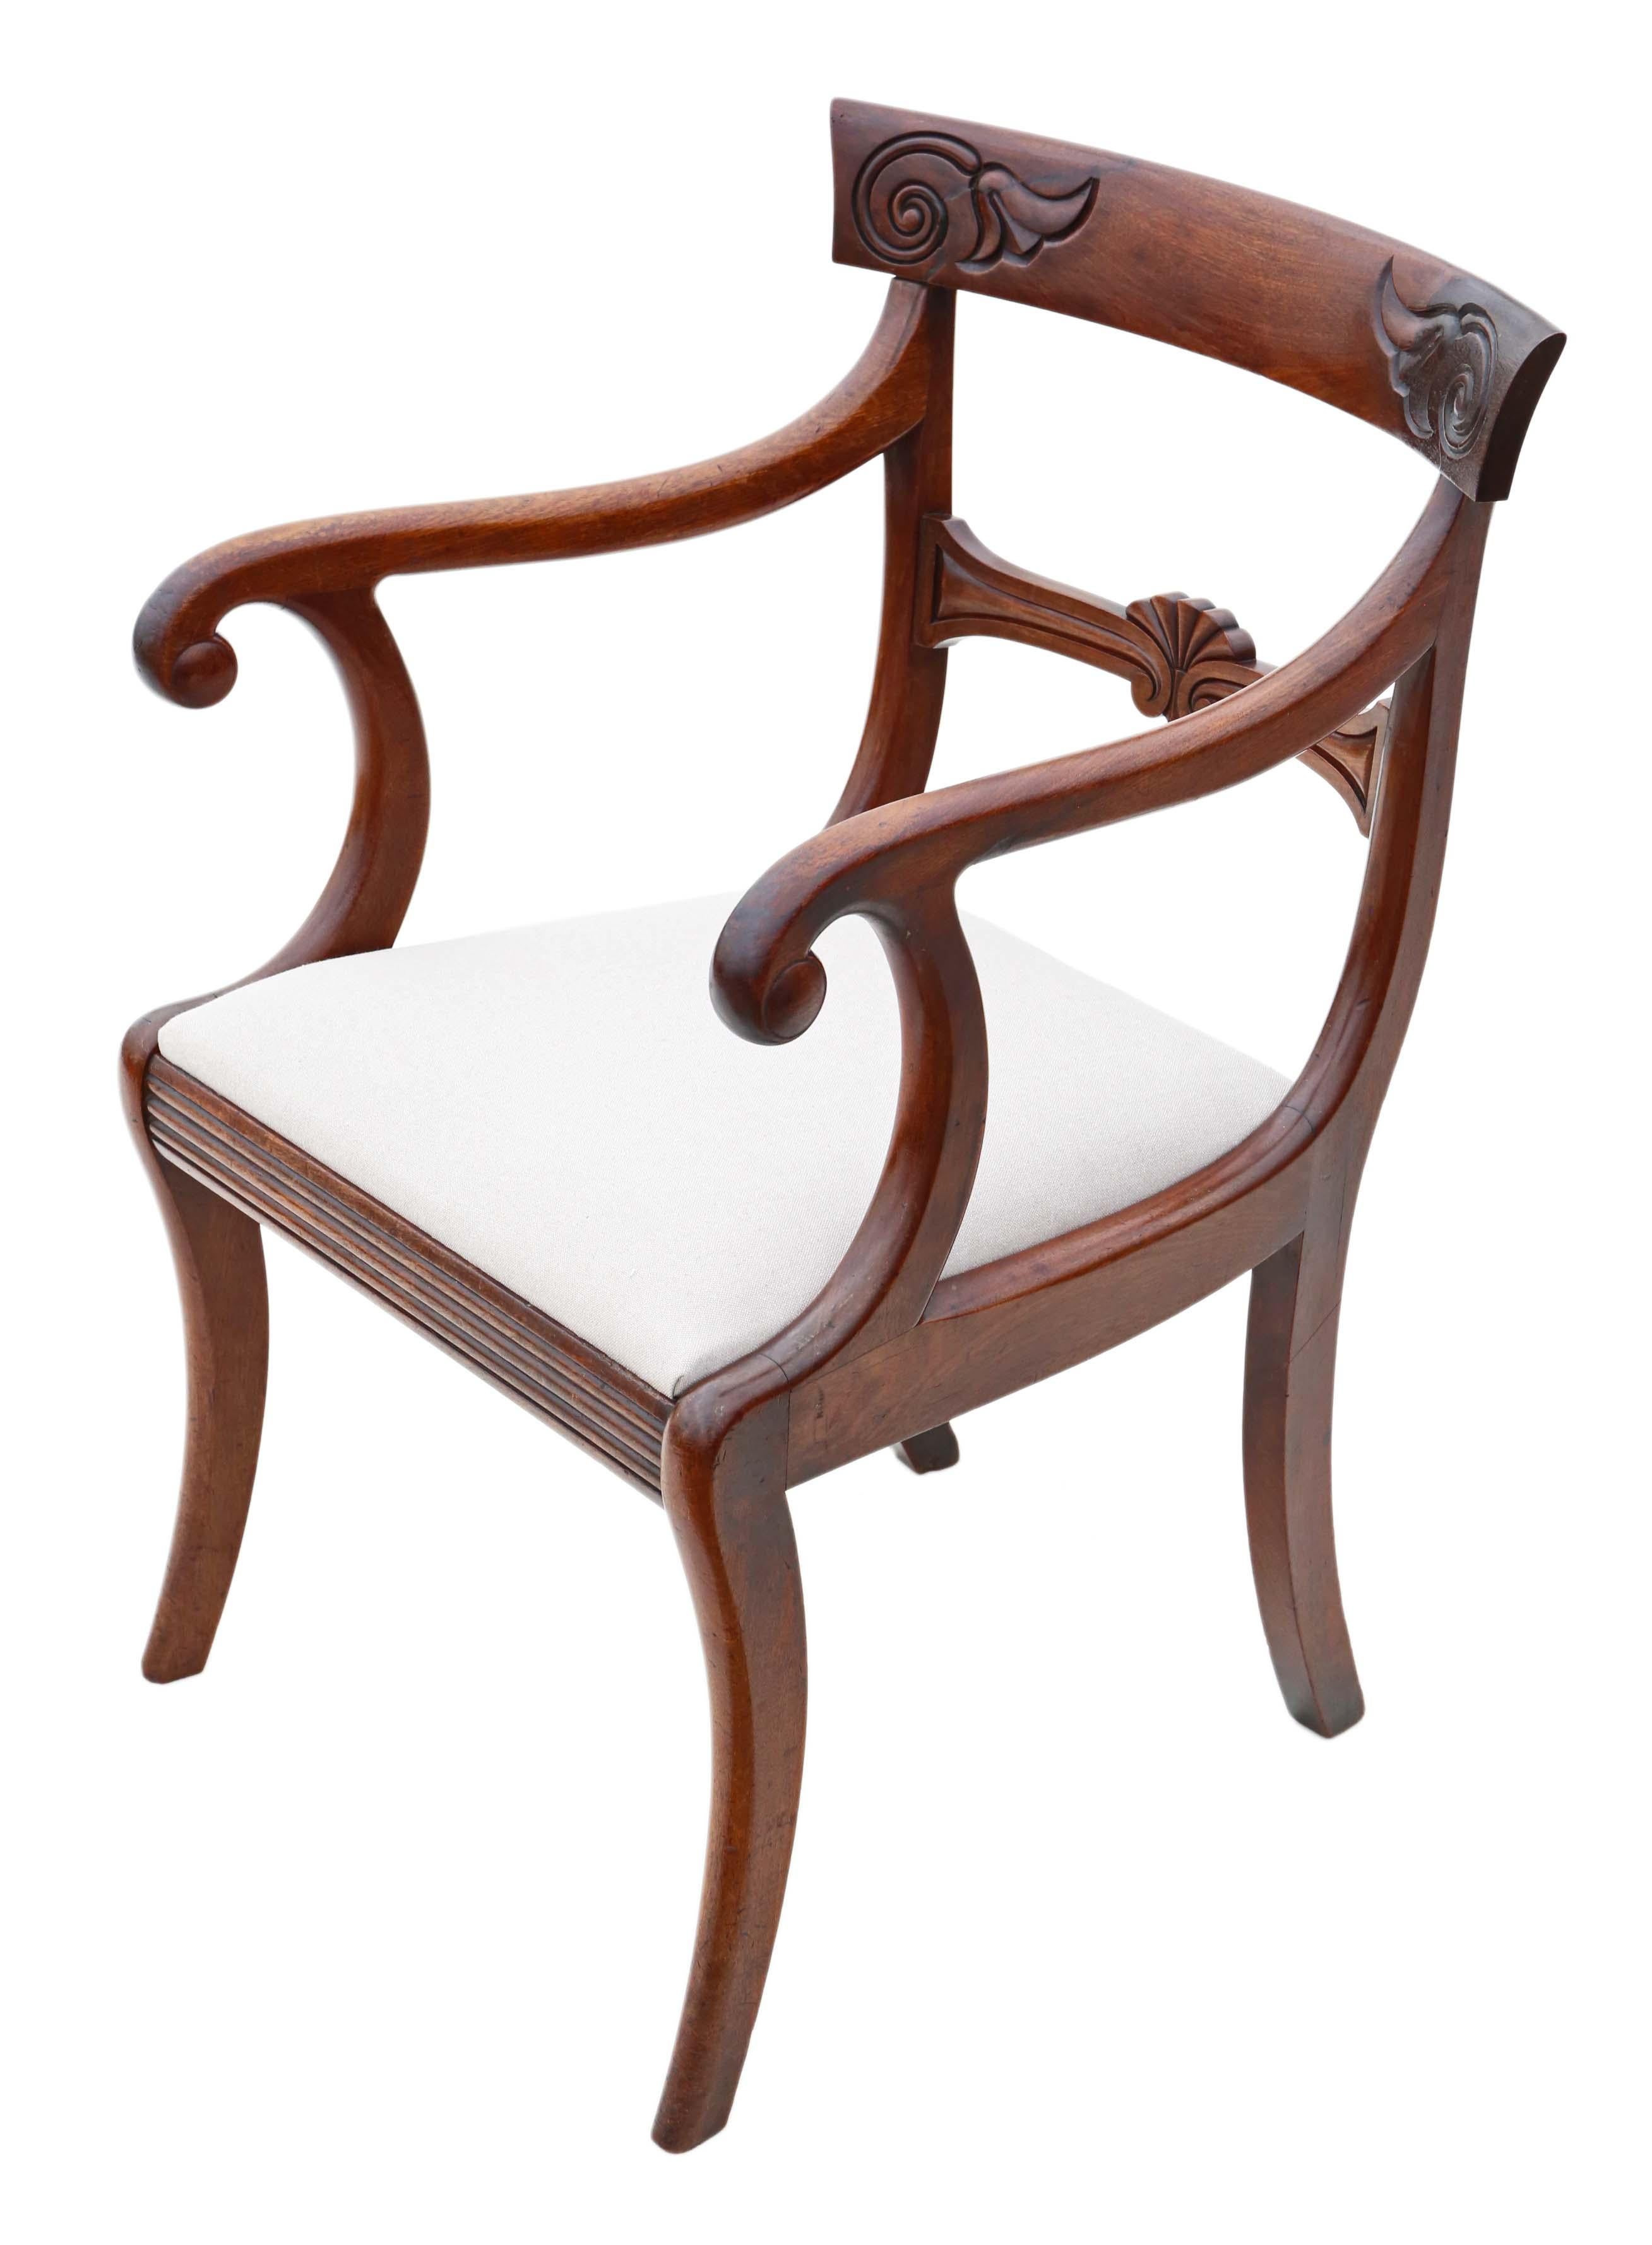 Esszimmerstühle aus kubanischem Mahagoni im Regency-Stil: 6er-Set (4+2), antike Qualität, um 1825 (Holz) im Angebot